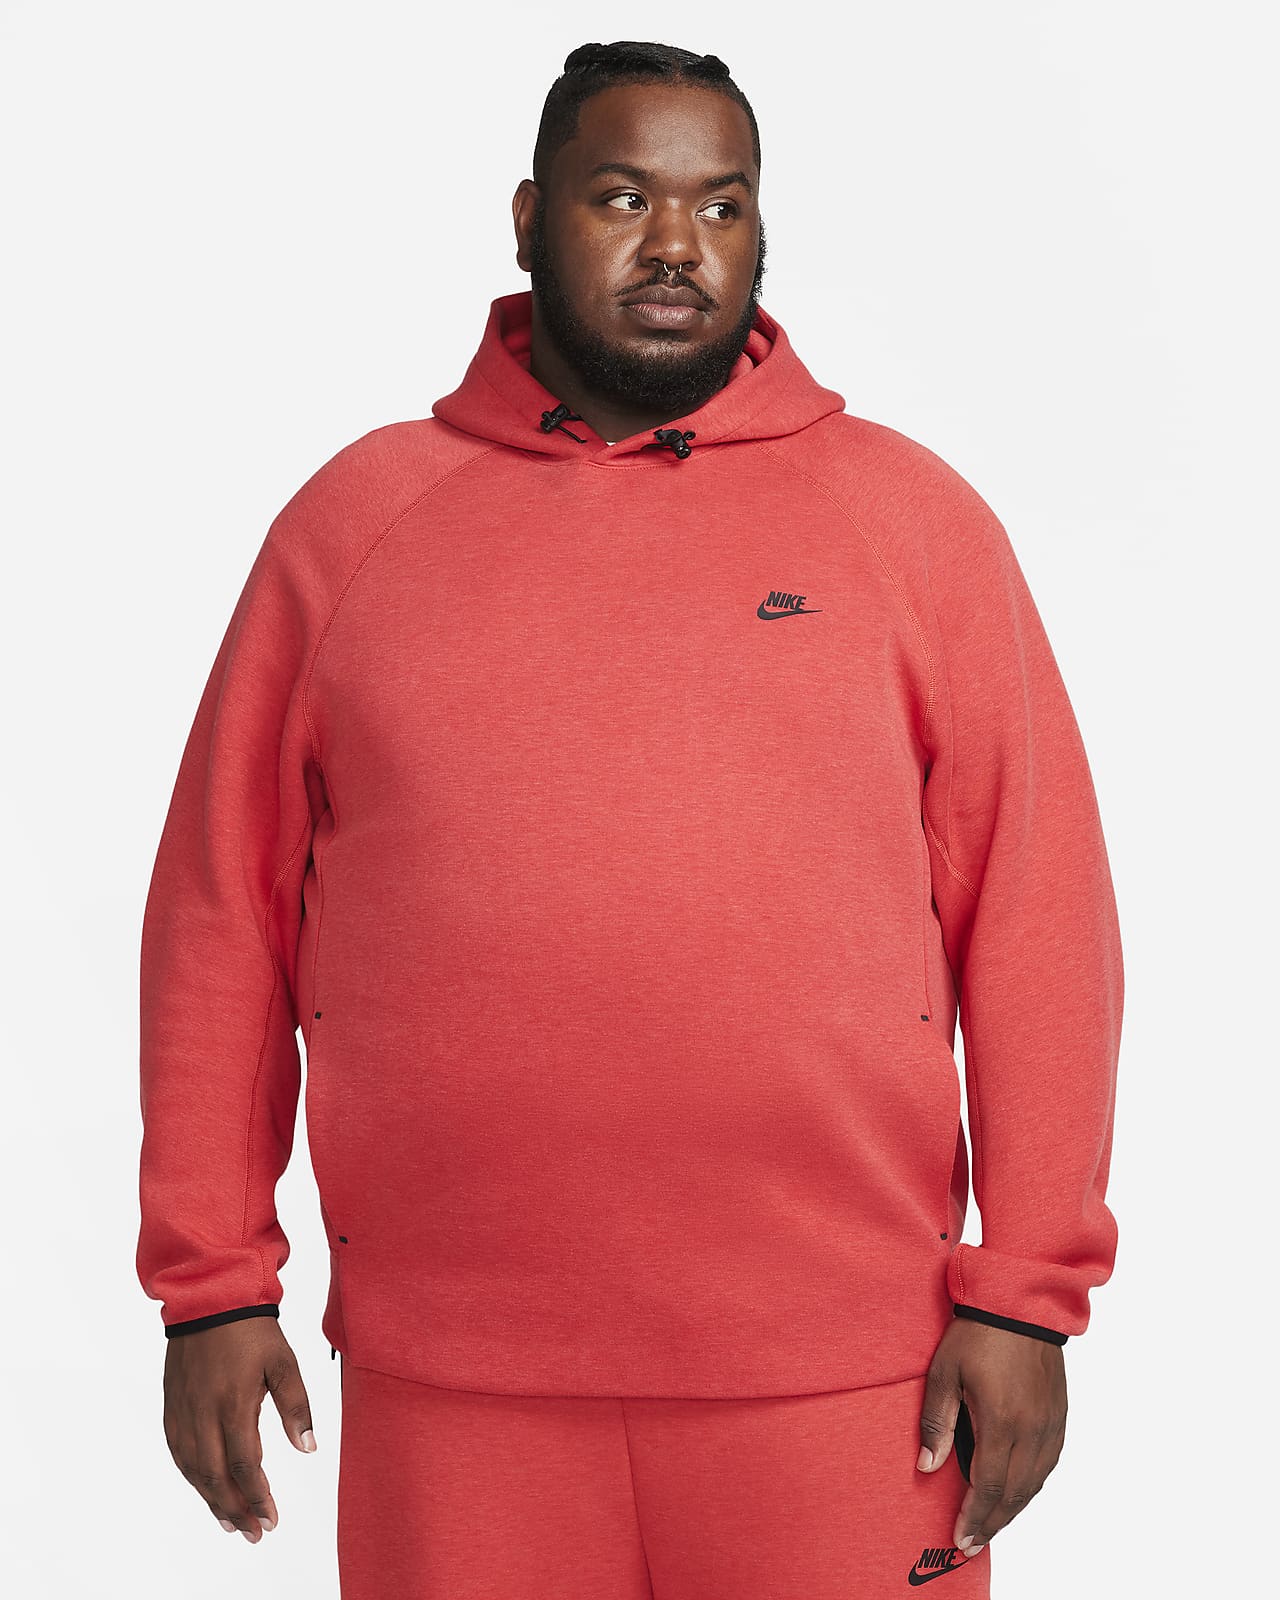 Nike Man Hat Magenta Size S/M Polyester